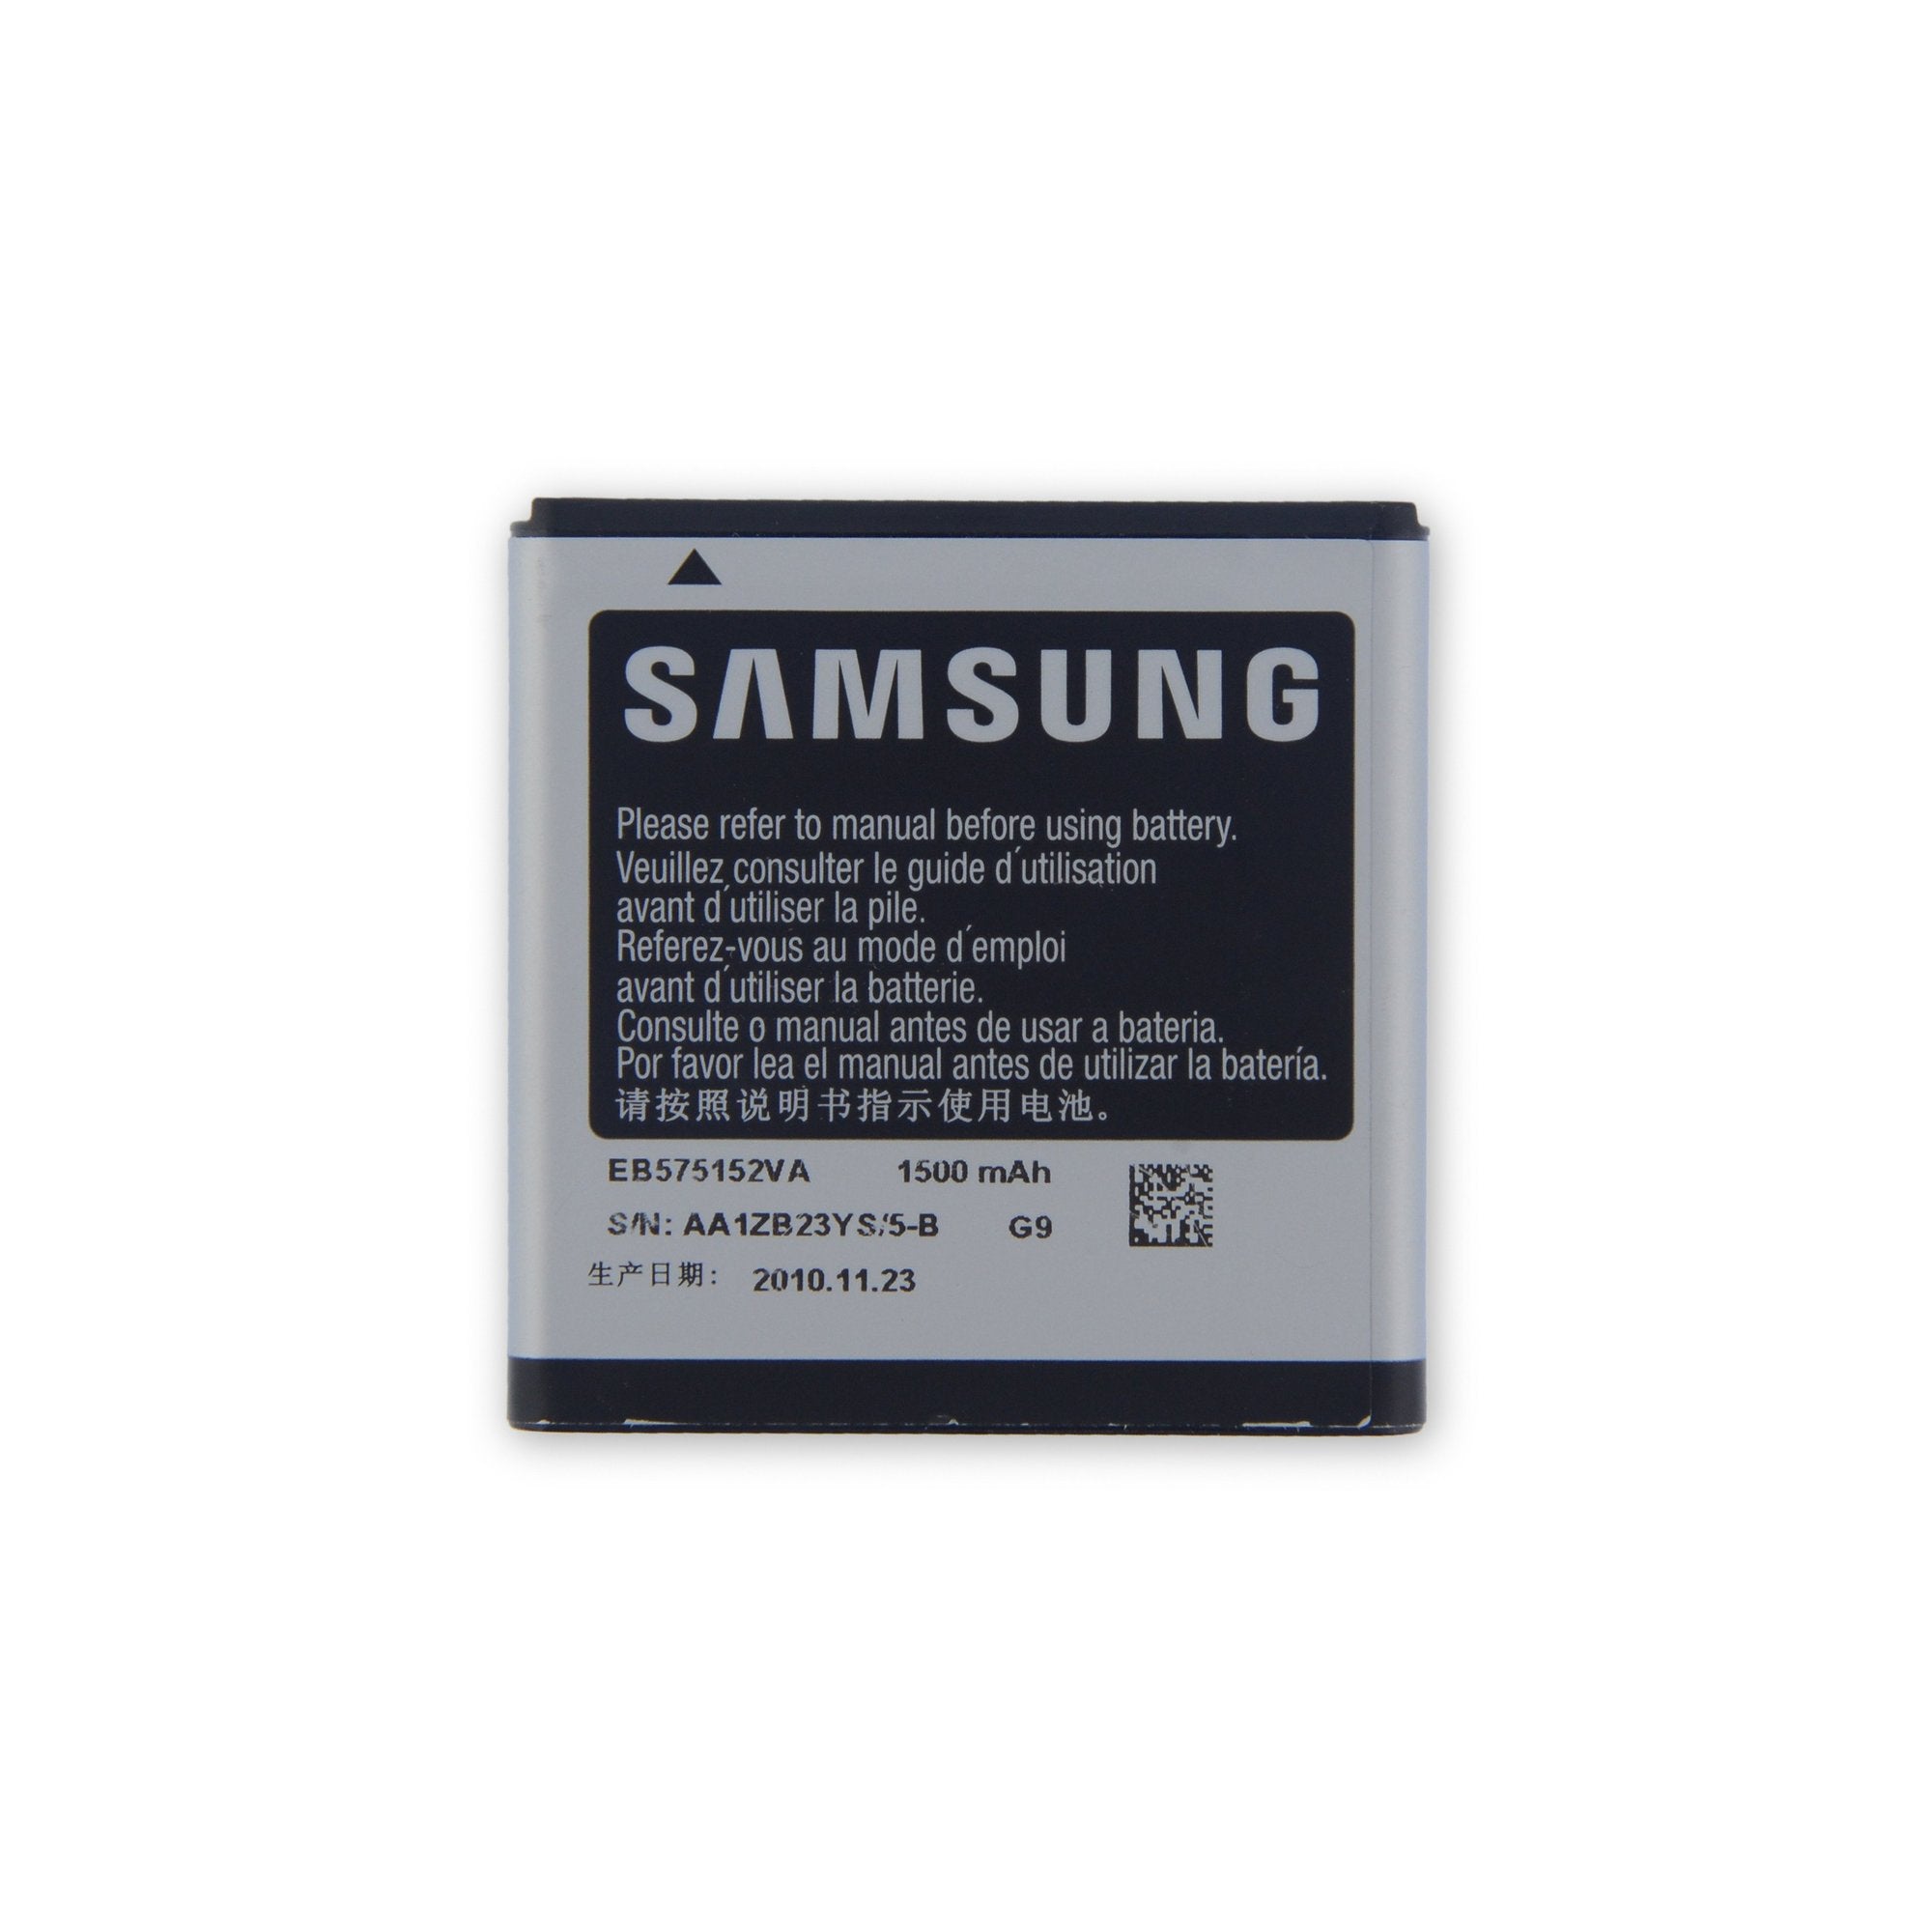 Samsung Battery EB575152VA Used, A-Stock